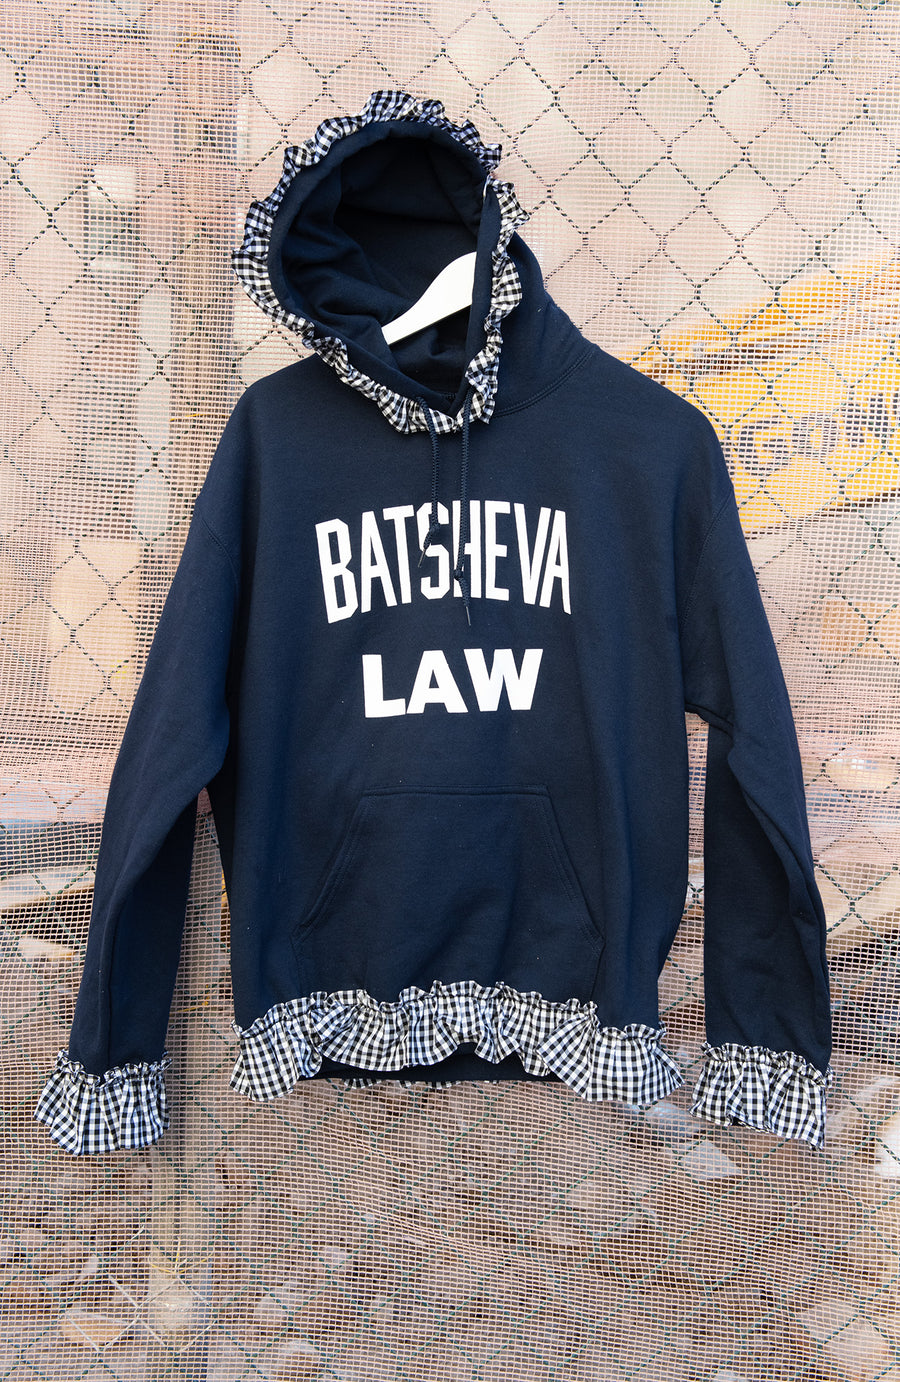 BATSHEVA - Gingham Ruffled BATSHEVA LAW Sweatshirt in Navy